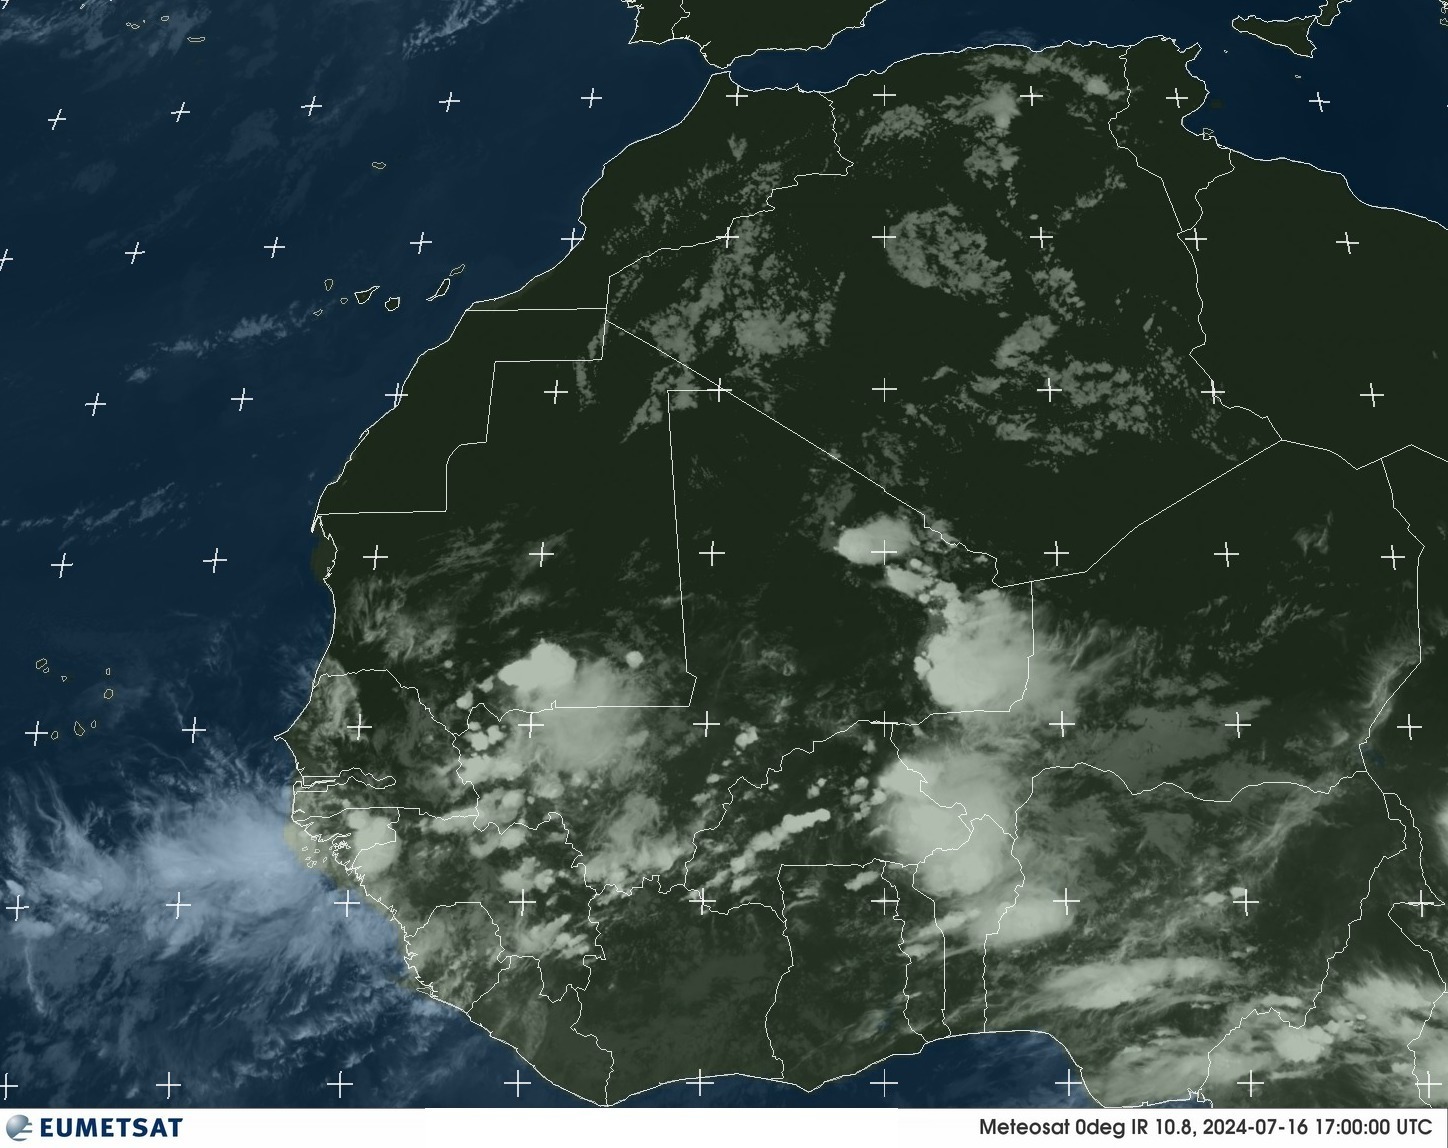 Satelliten - Golf von Guinea - Di, 16.07. 20:00 MESZ